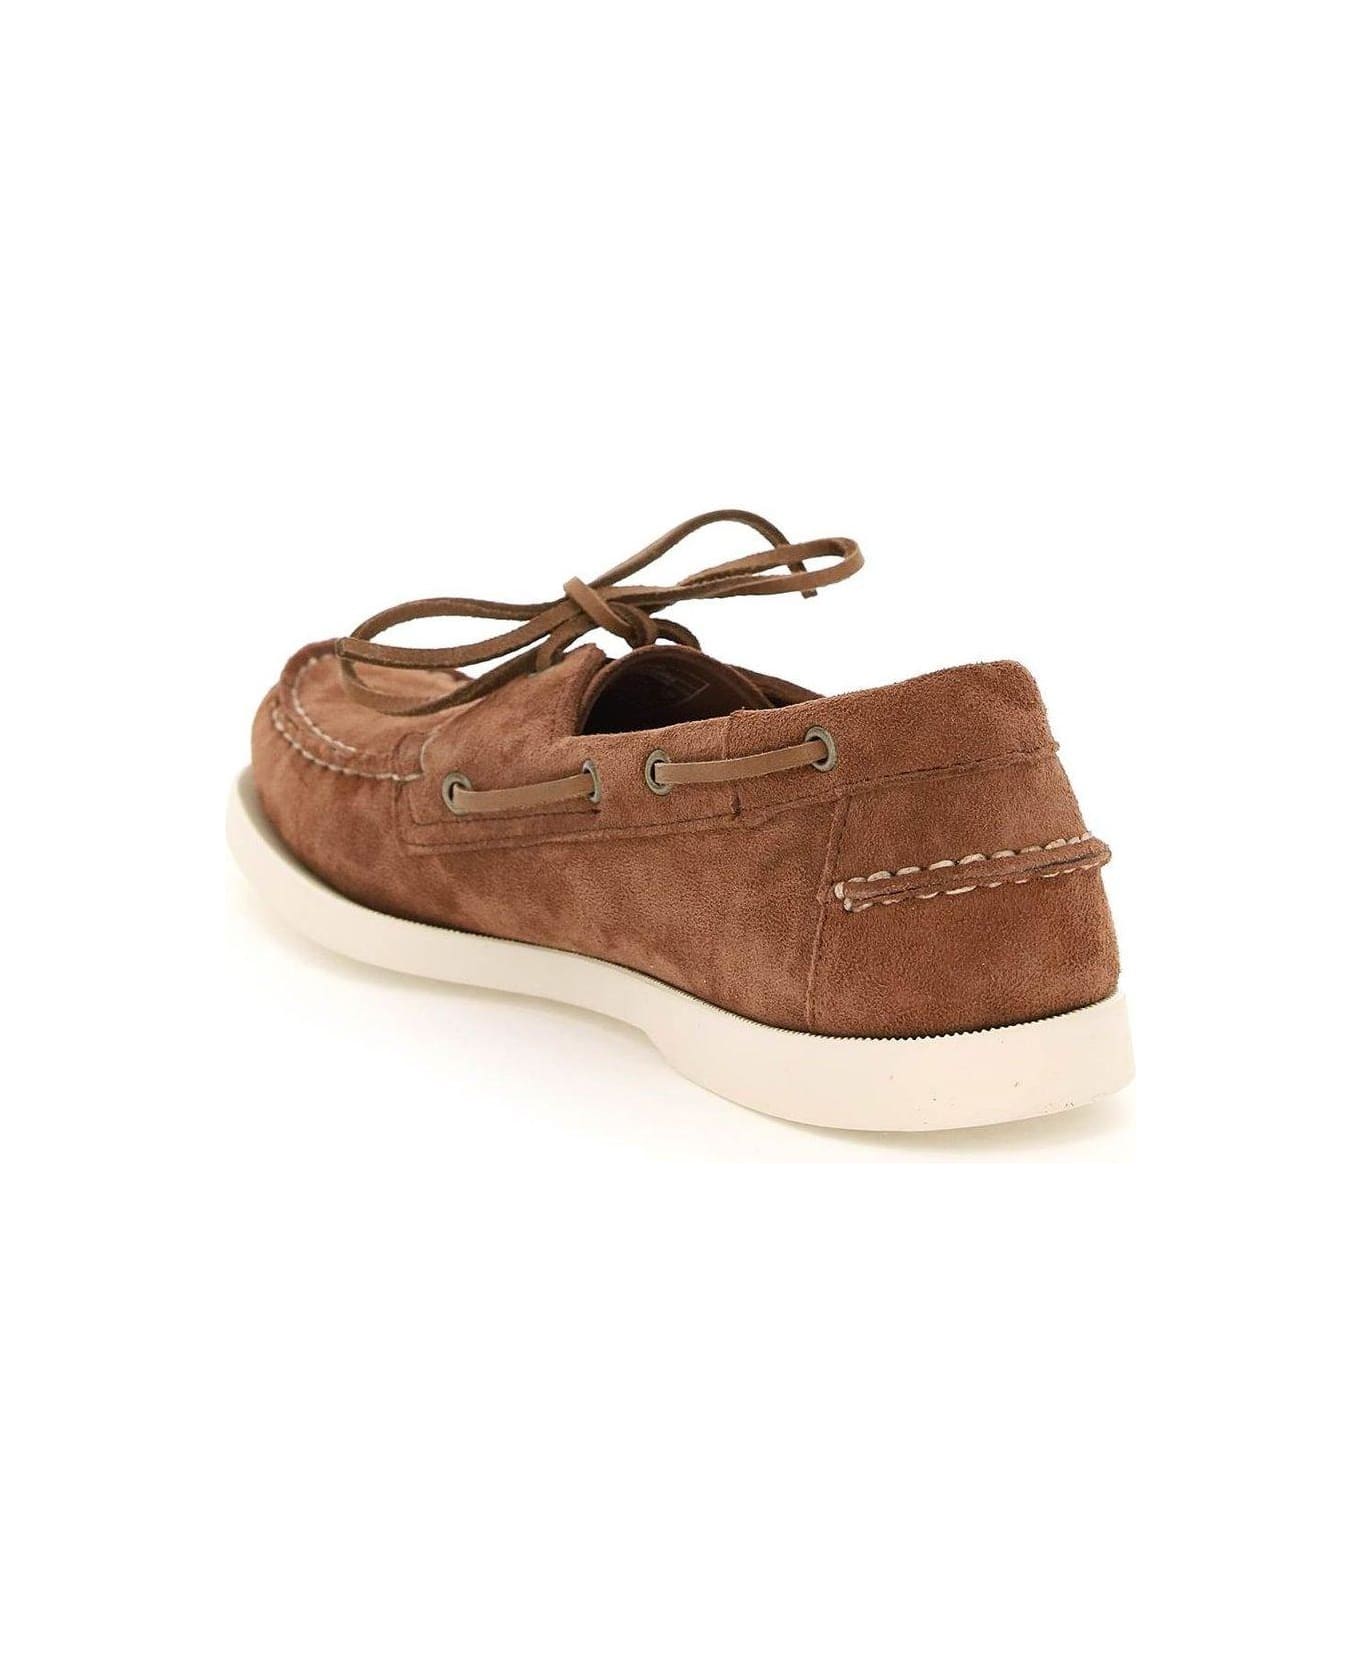 Sebago Lace-up Round Toe Boat Shoes - Dark Brown